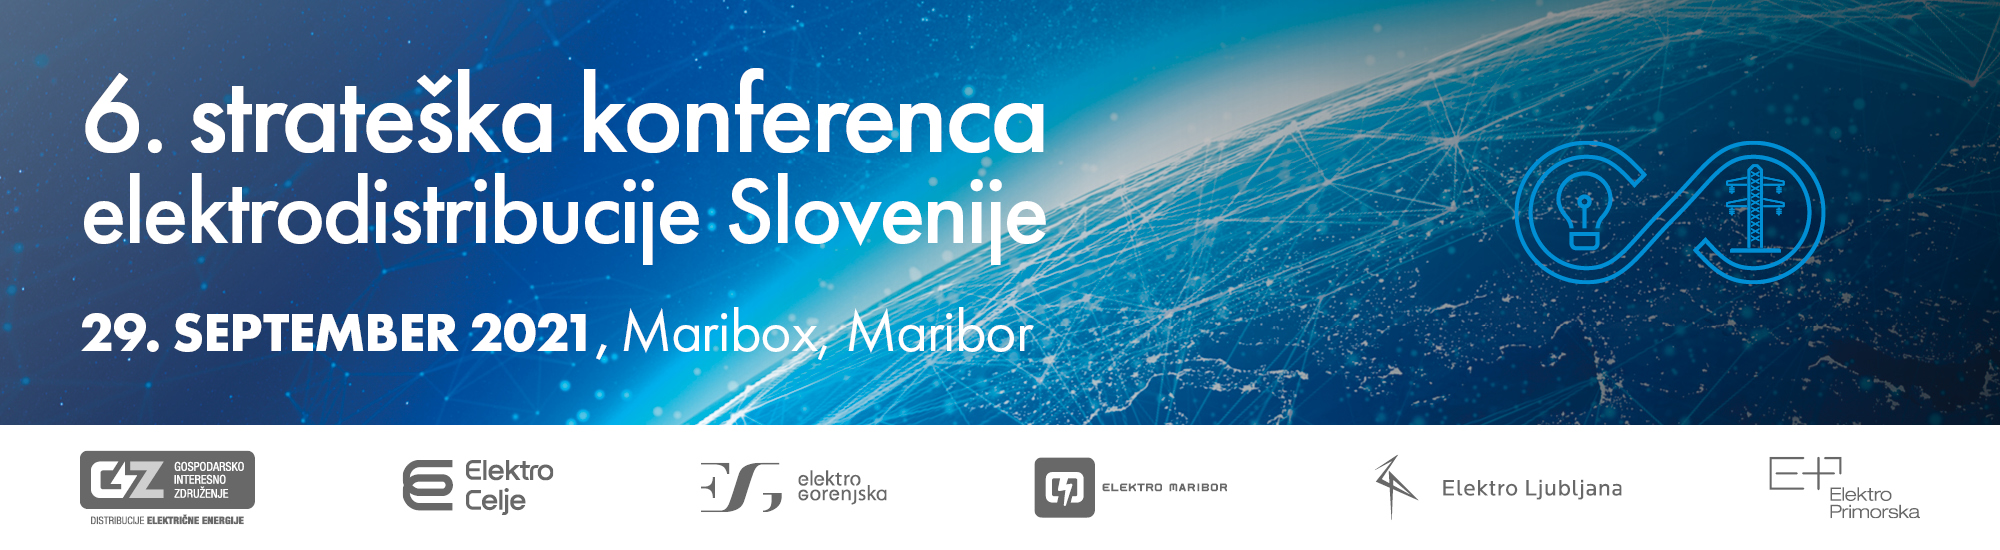 Vabilo na Strateško konferenco elektrodistribucije Slovenije 2021